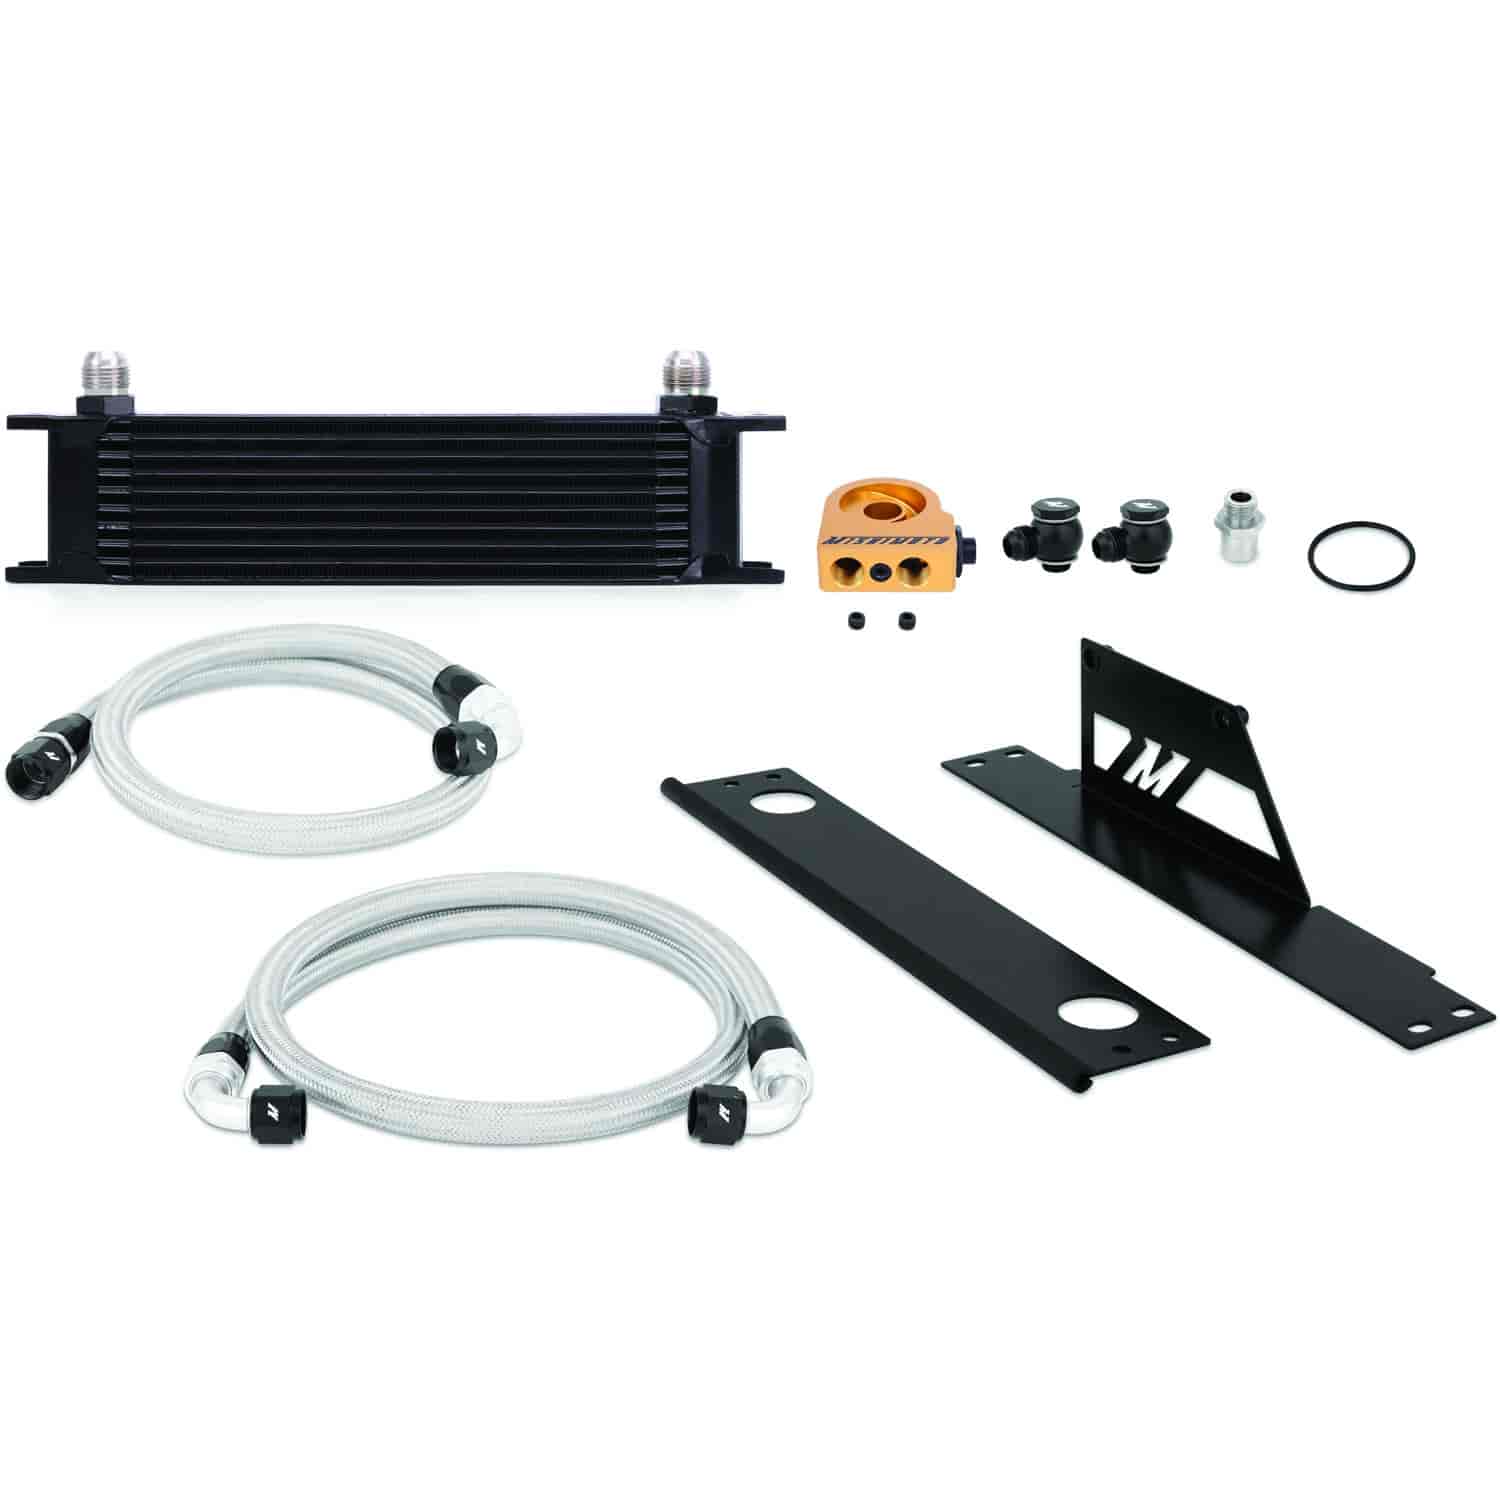 Subaru WRX and STI Thermostatic Oil Cooler Kit Black - MFG Part No. MMOC-WRX-01TBK